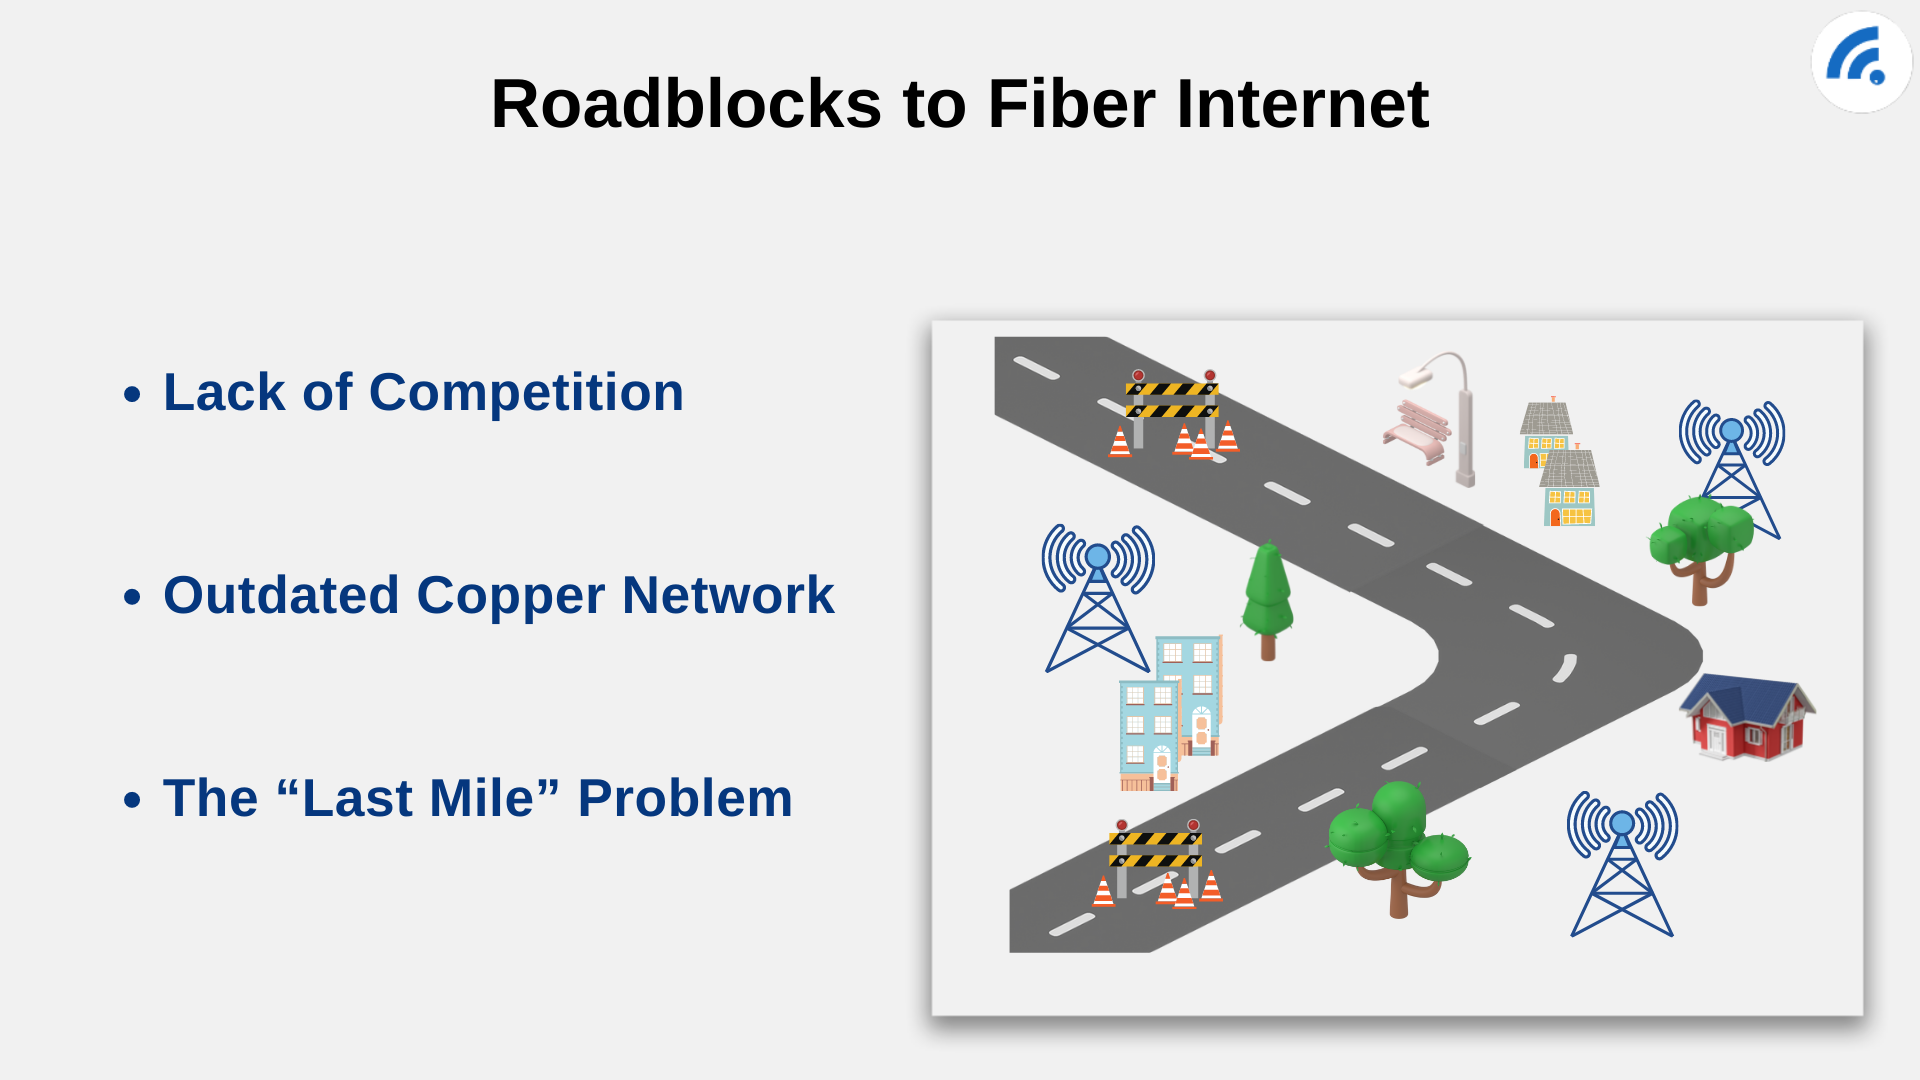 Roadblocks to fiber internet